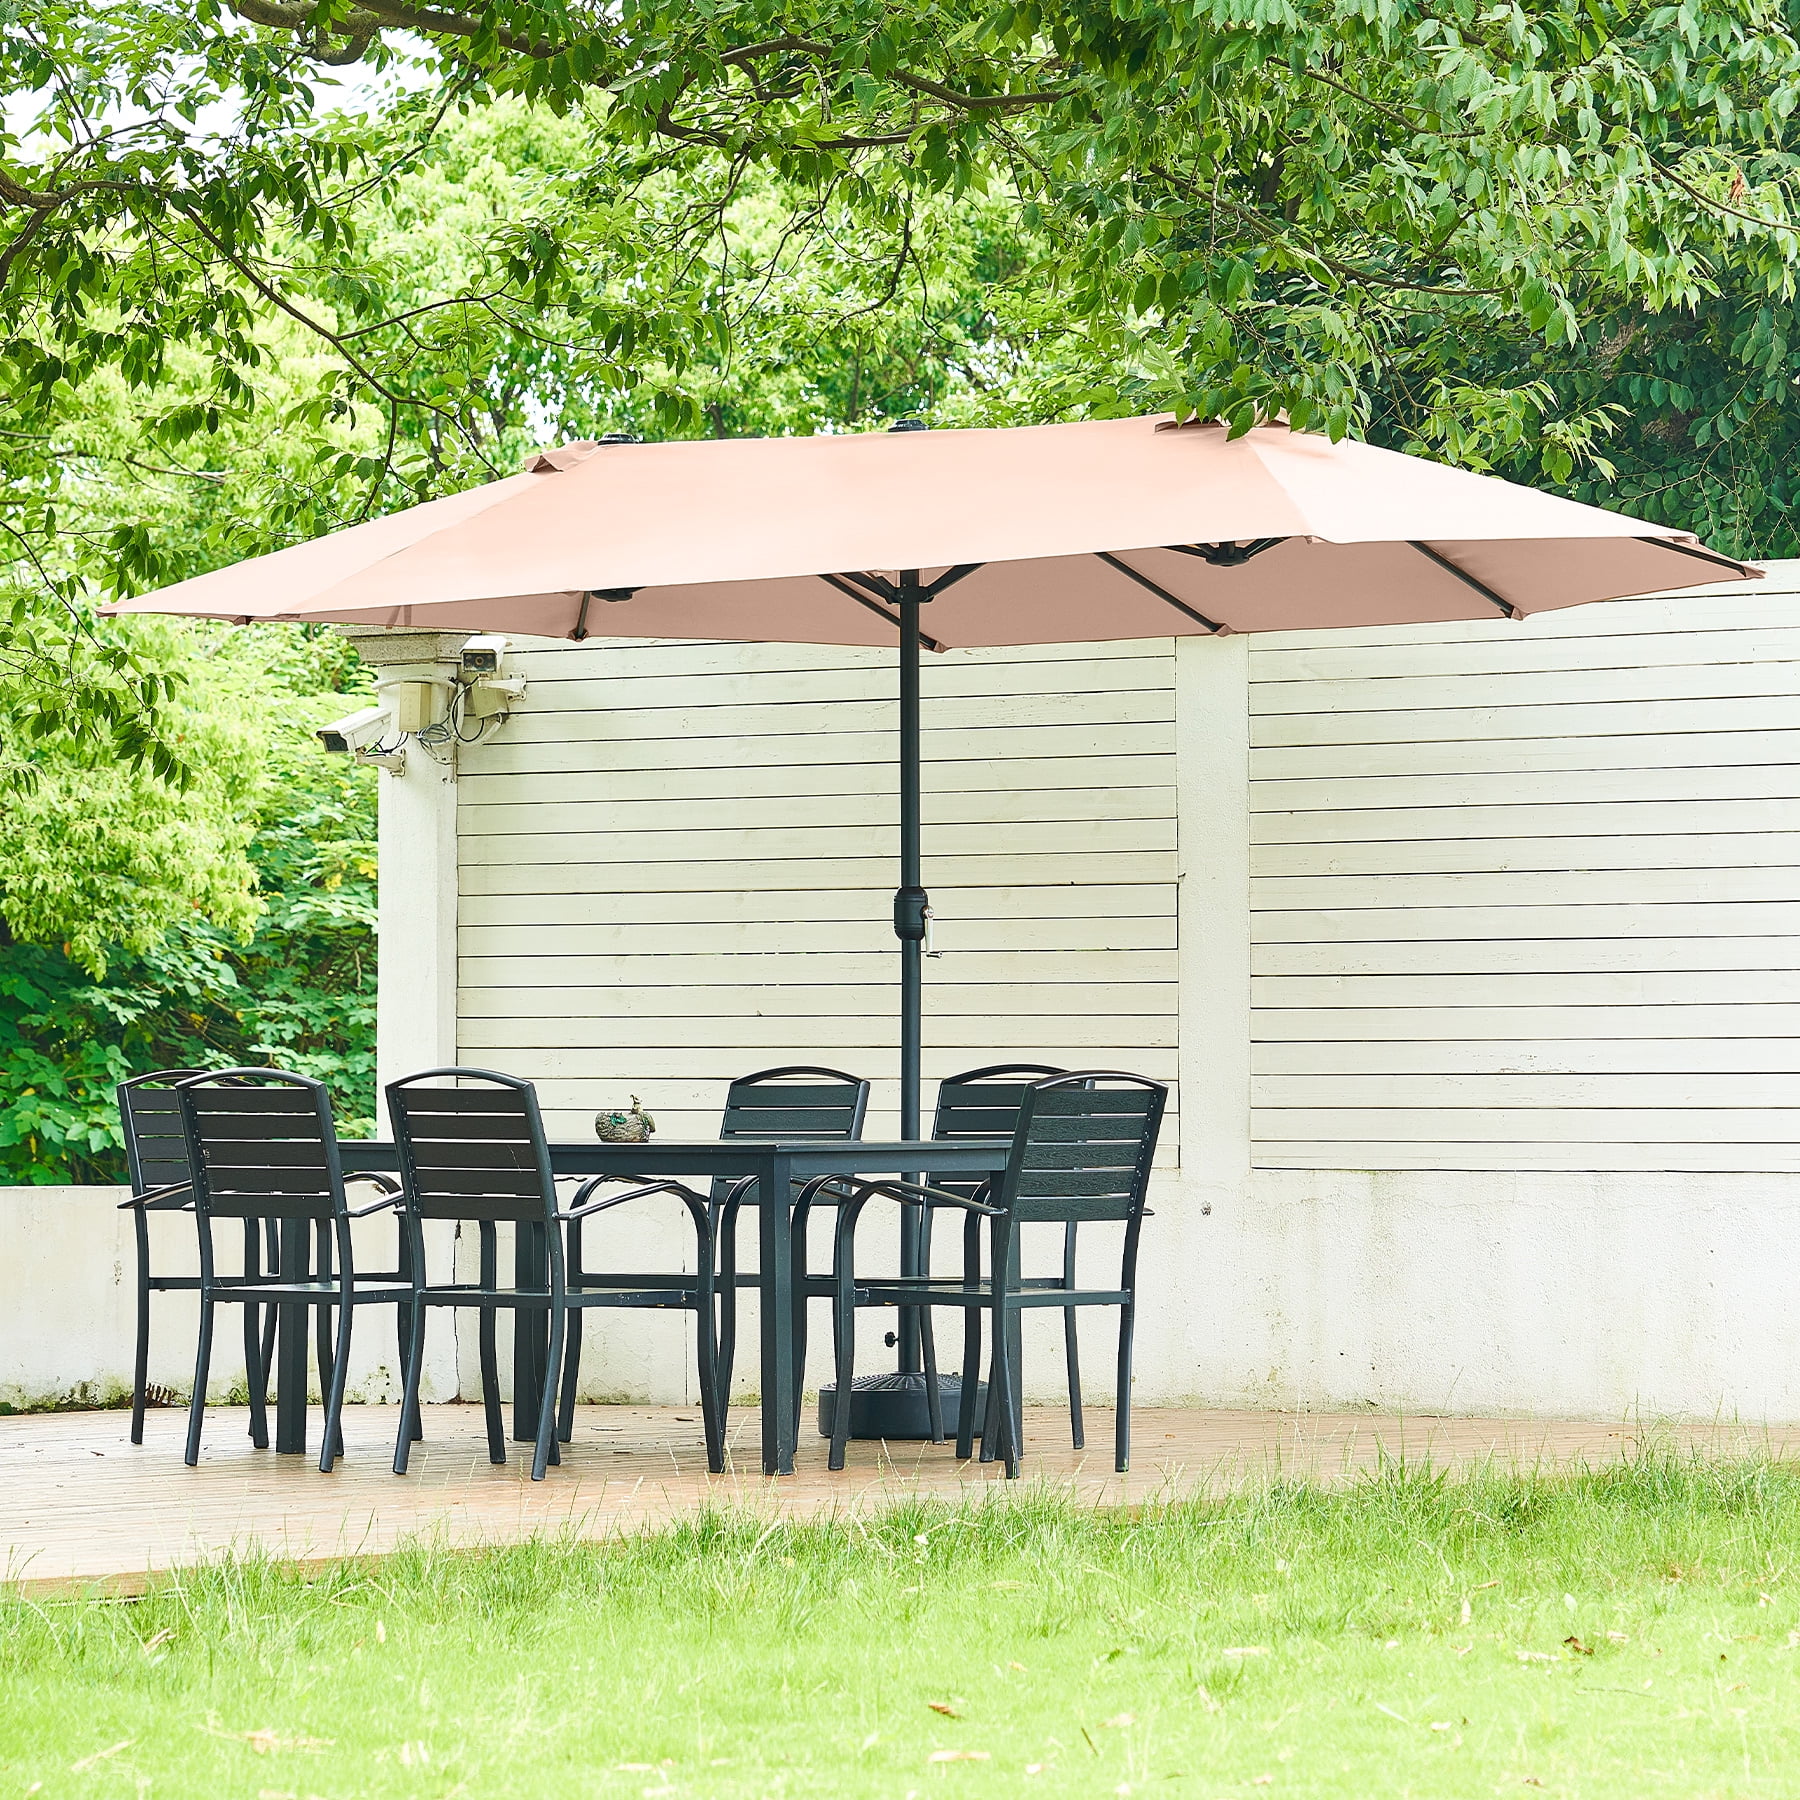 Details about   Outdoor Garden Umbrella Patio Furniture Waterproof UV-Protection Garden Canopy 